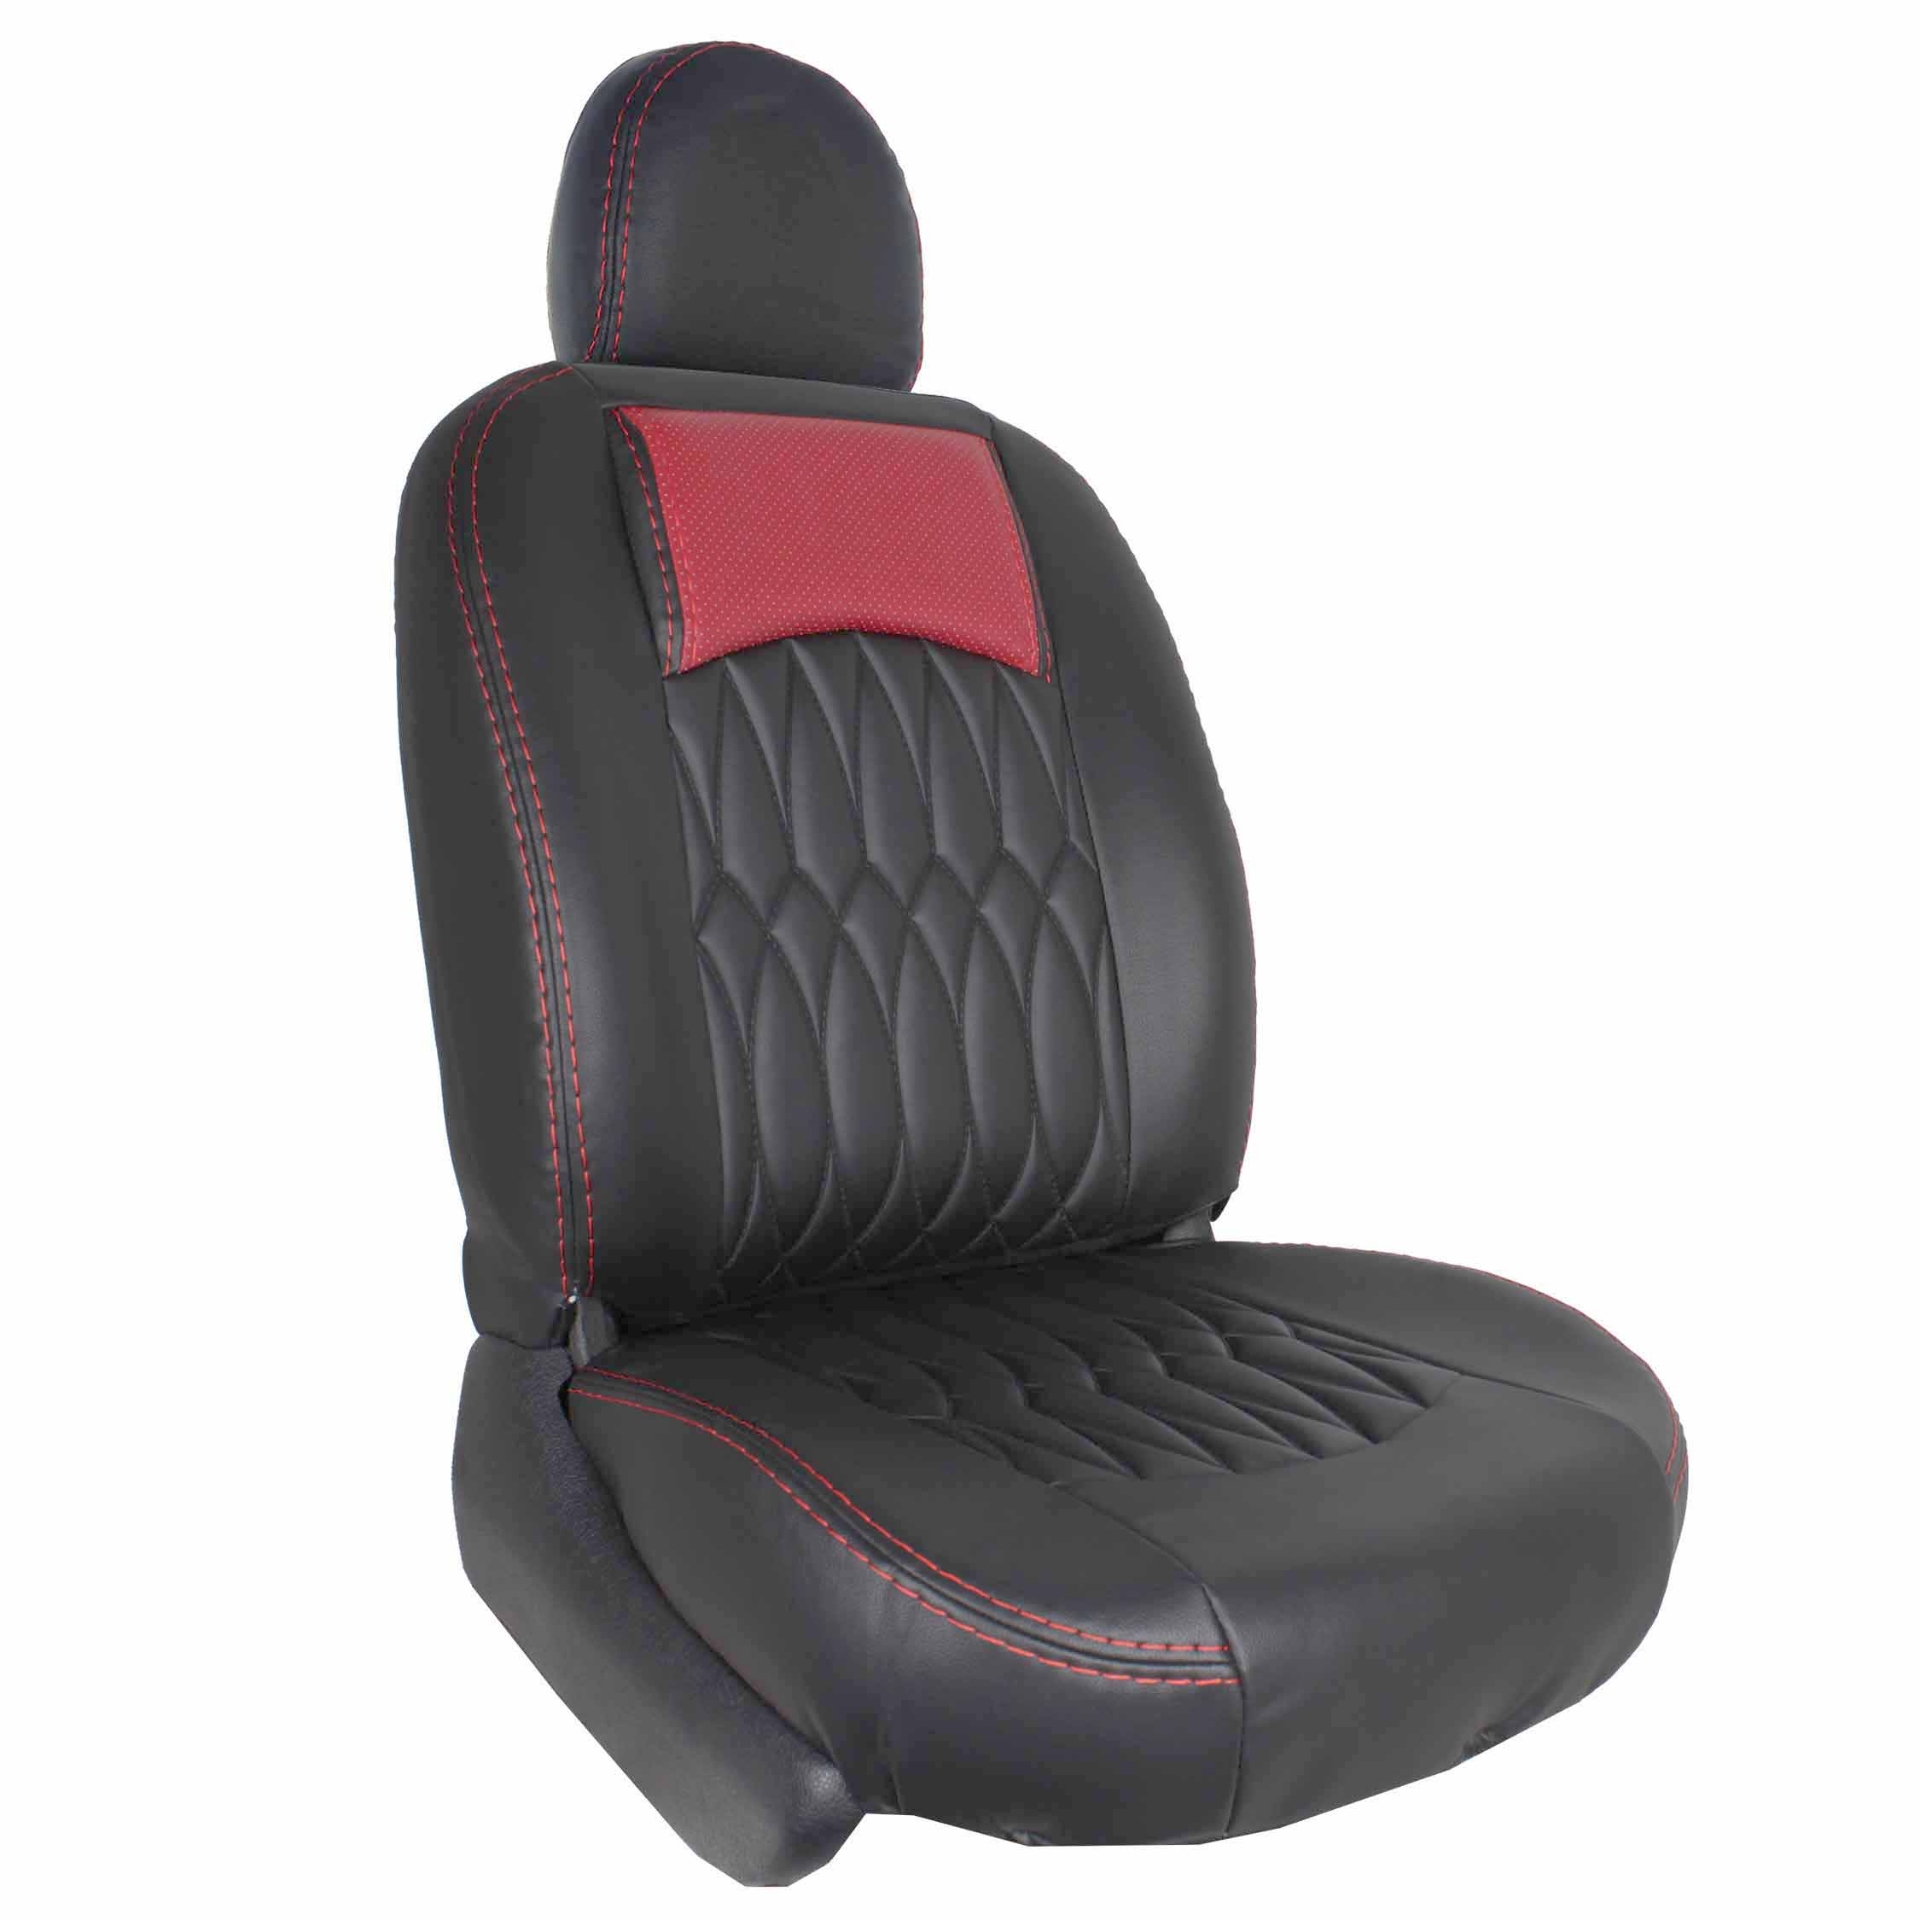 تصویر  روکش صندلی 405 صندلی جدید چرم مصنوعی طرح پورشه جلوه مدل disk